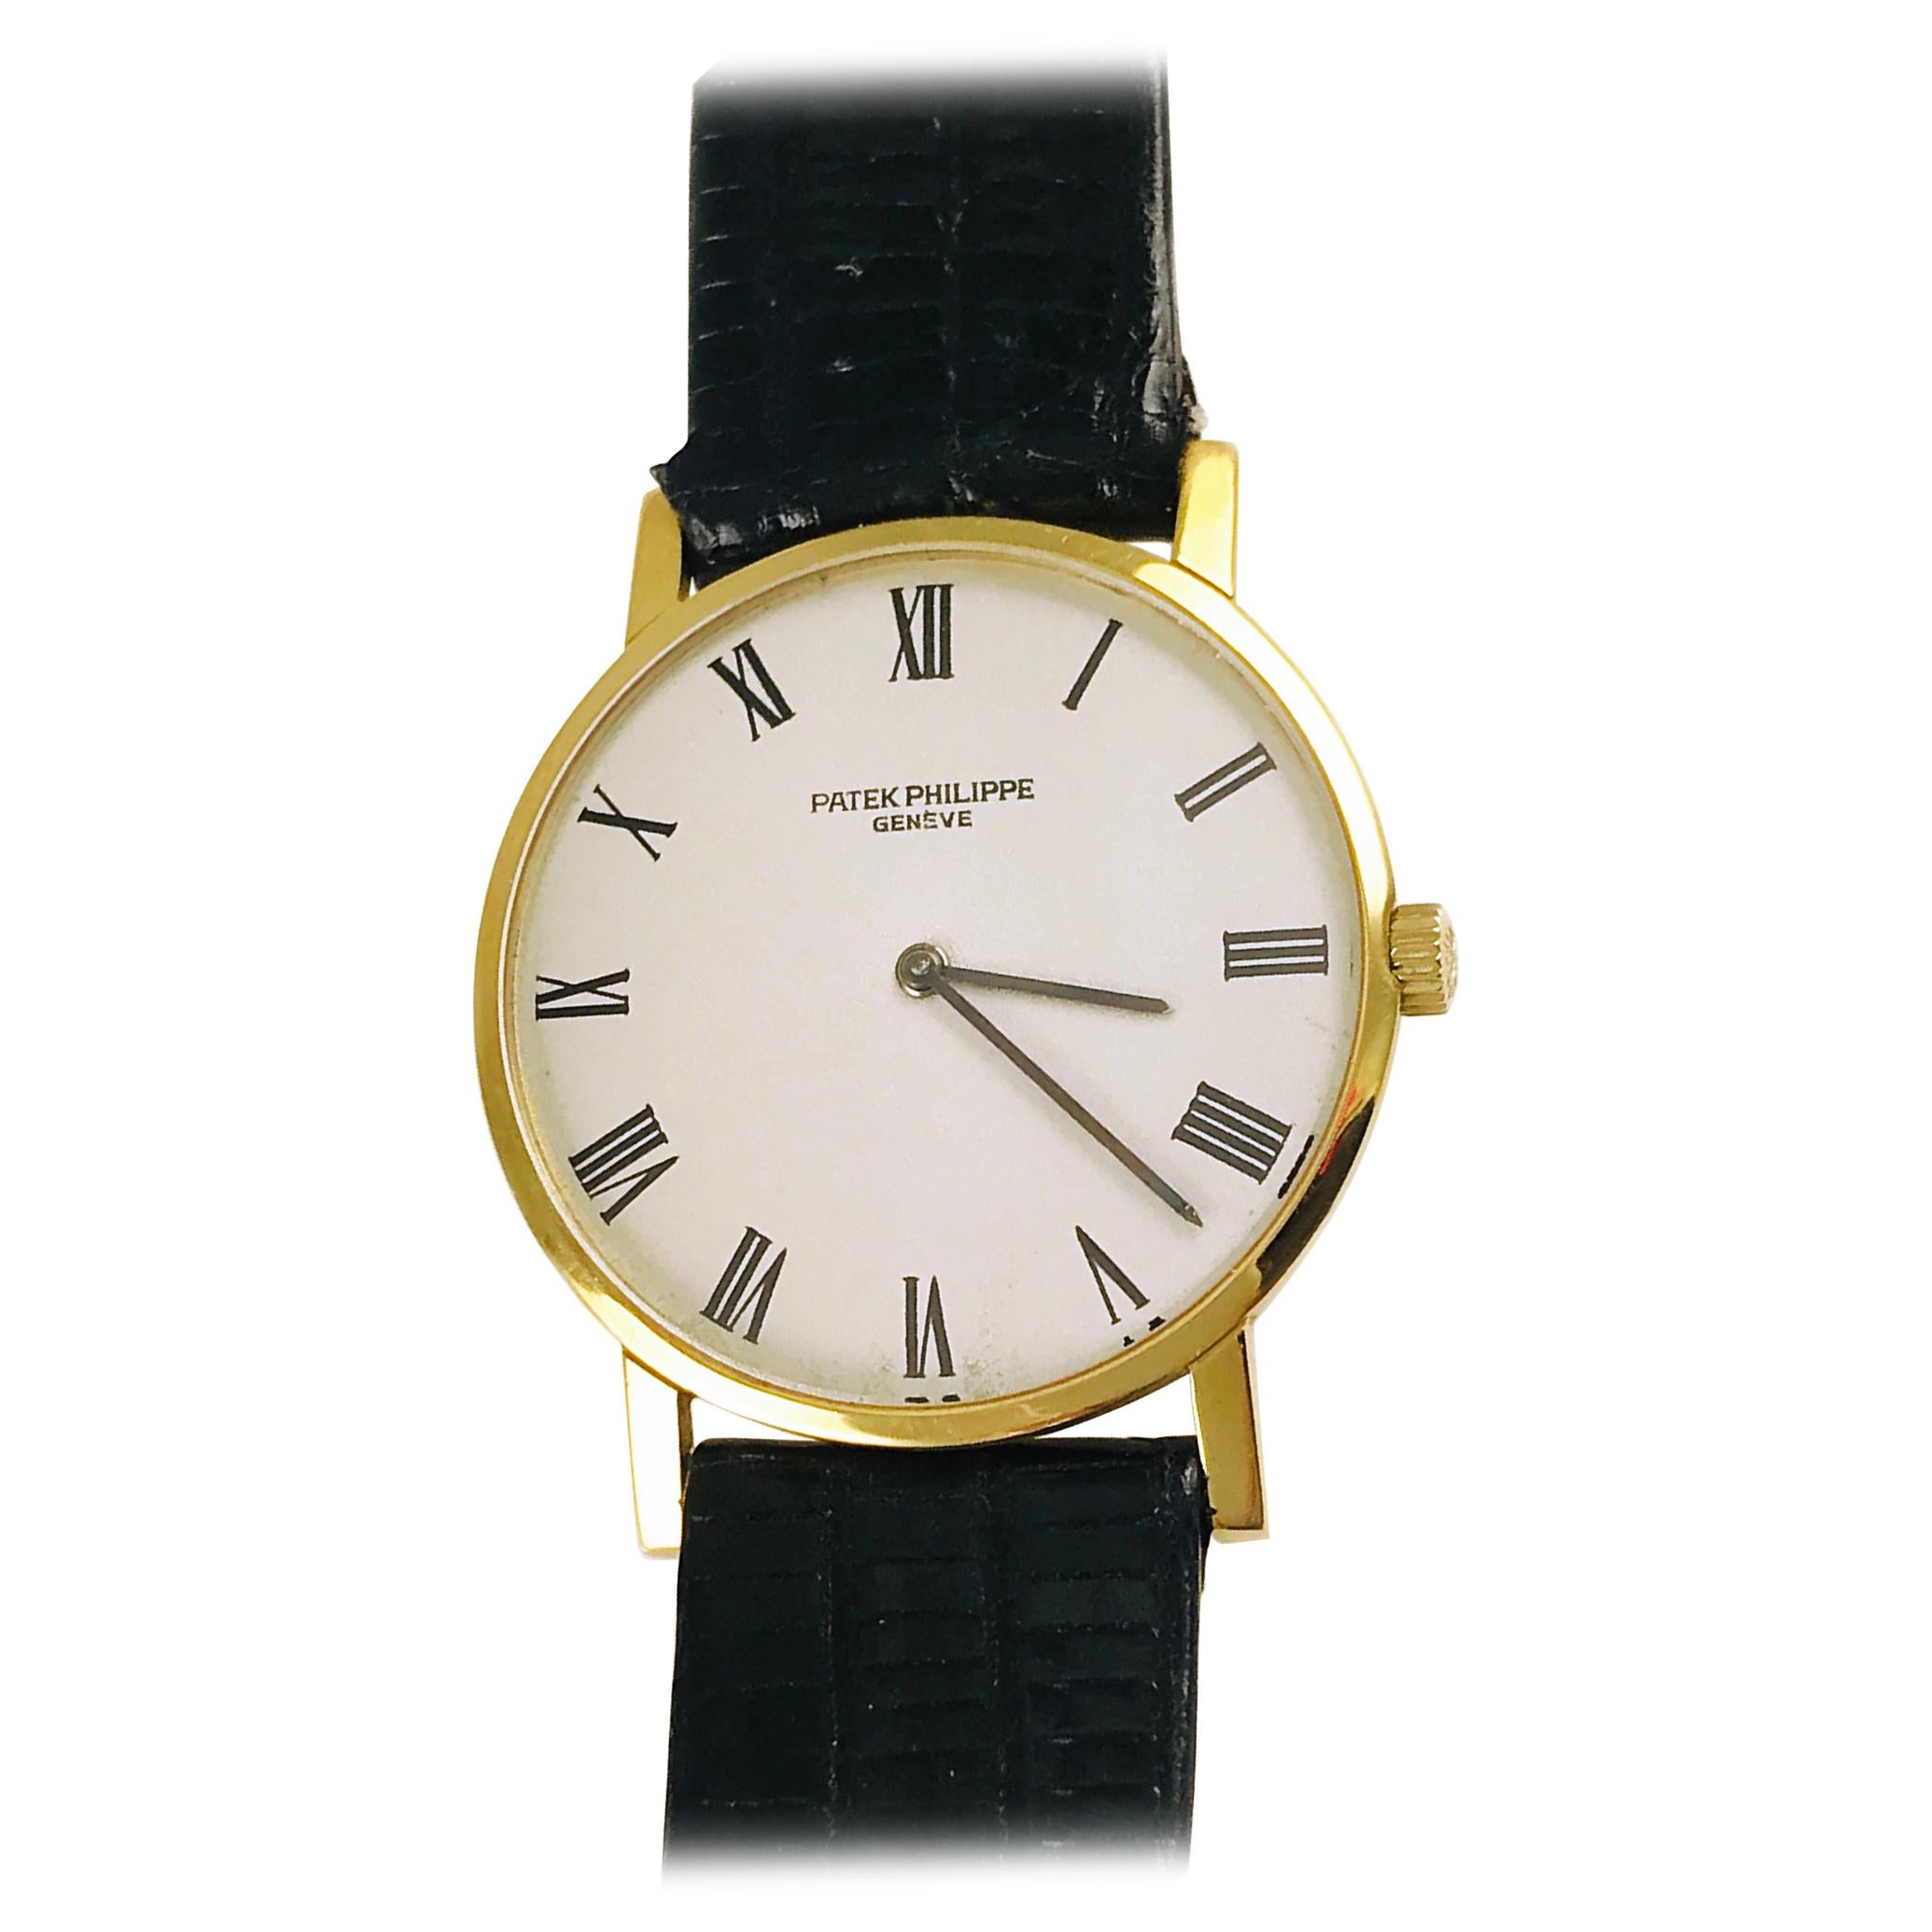 Patek Philippe Calatrava, 18 Jewel Movement Wristwatch